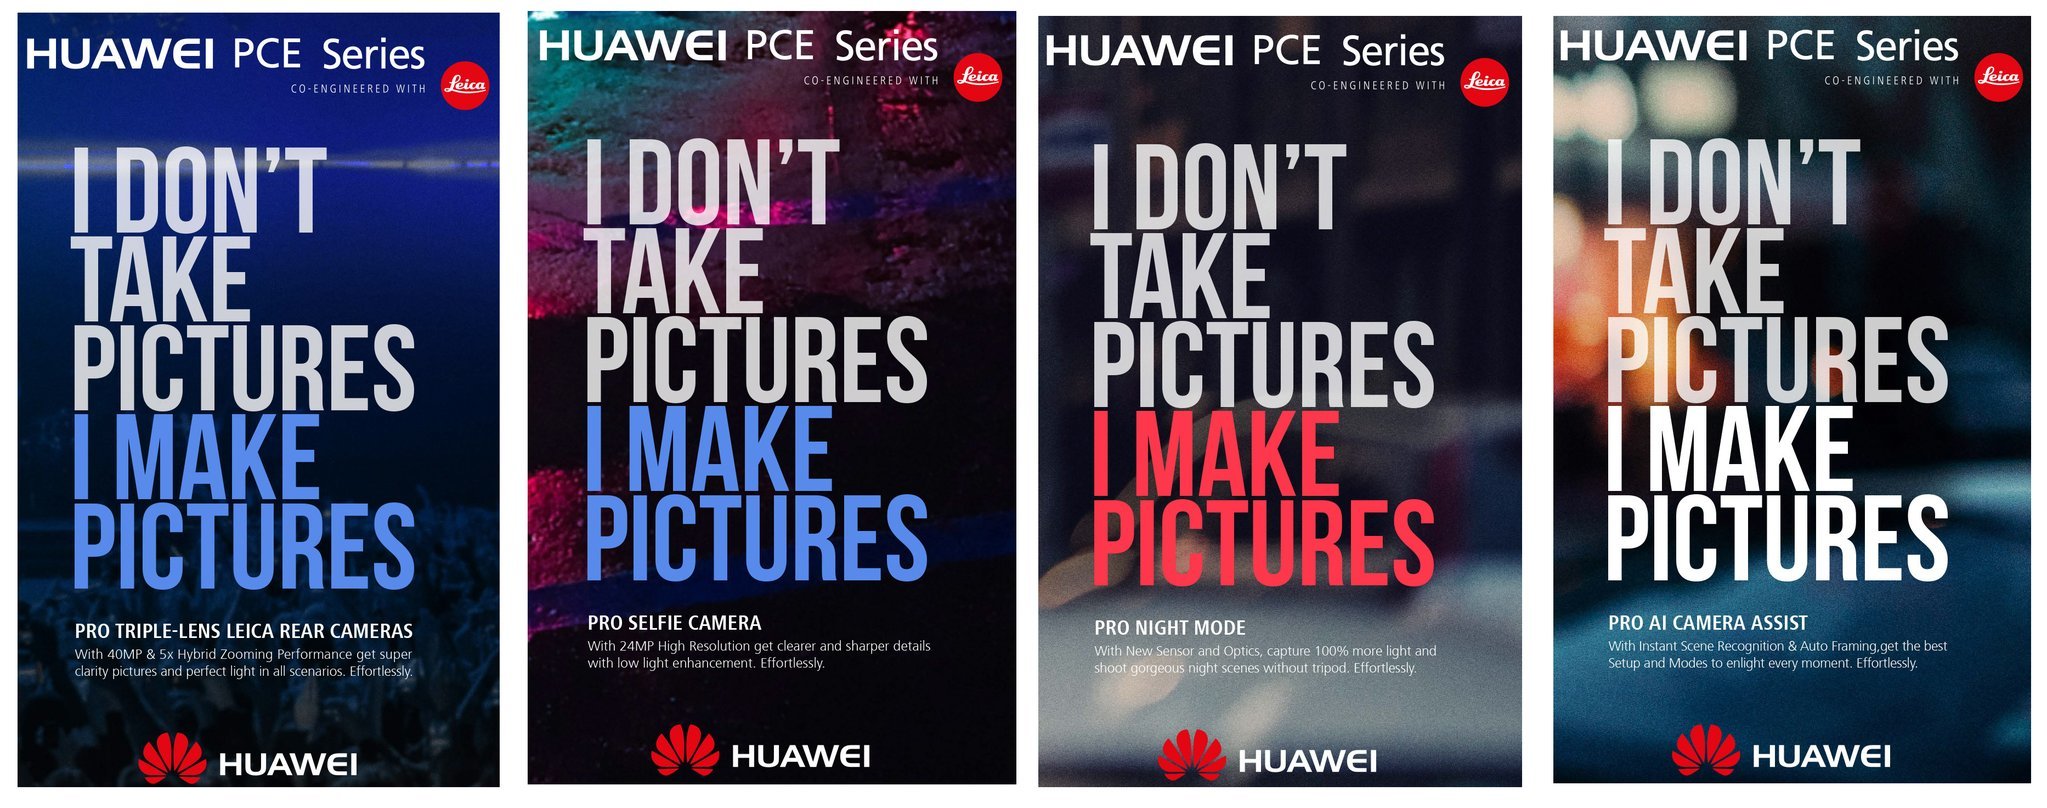 Next Gen Huawei P-Series Camera Details